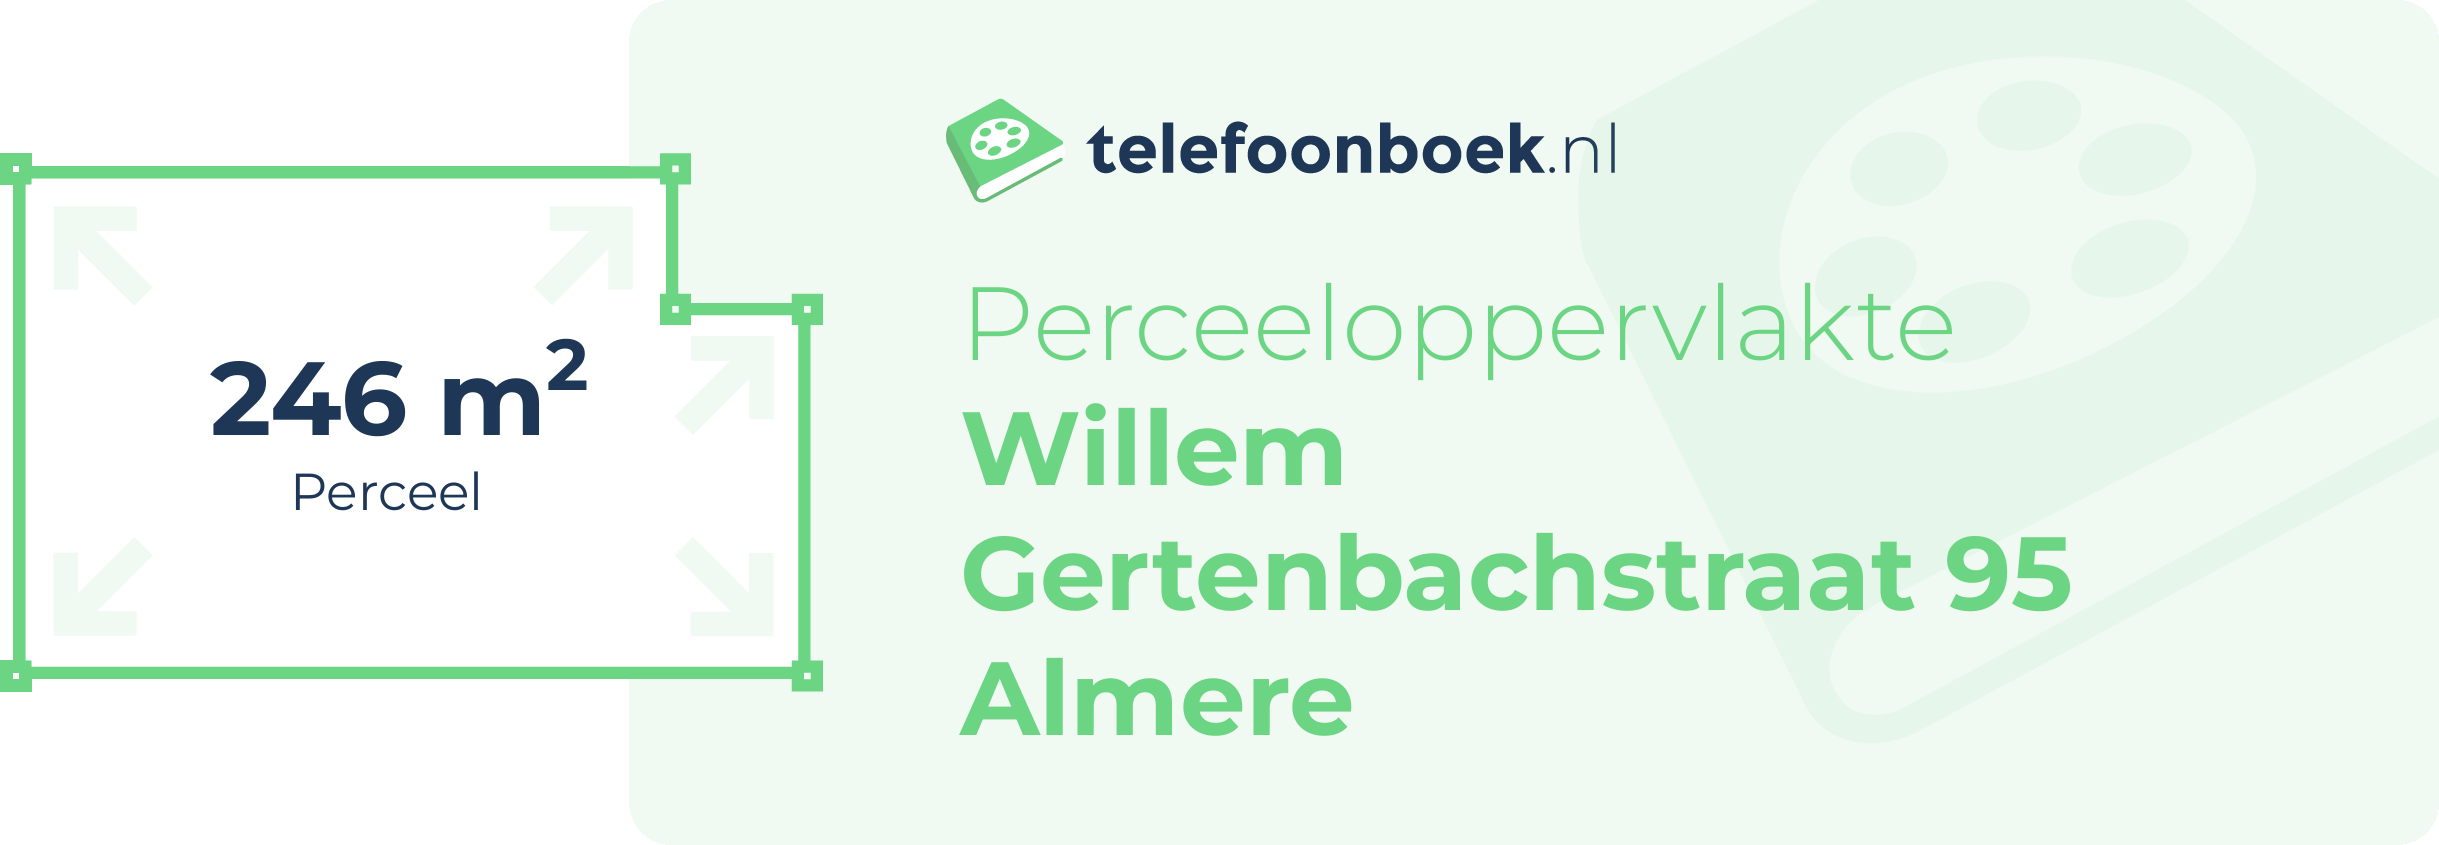 Perceeloppervlakte Willem Gertenbachstraat 95 Almere